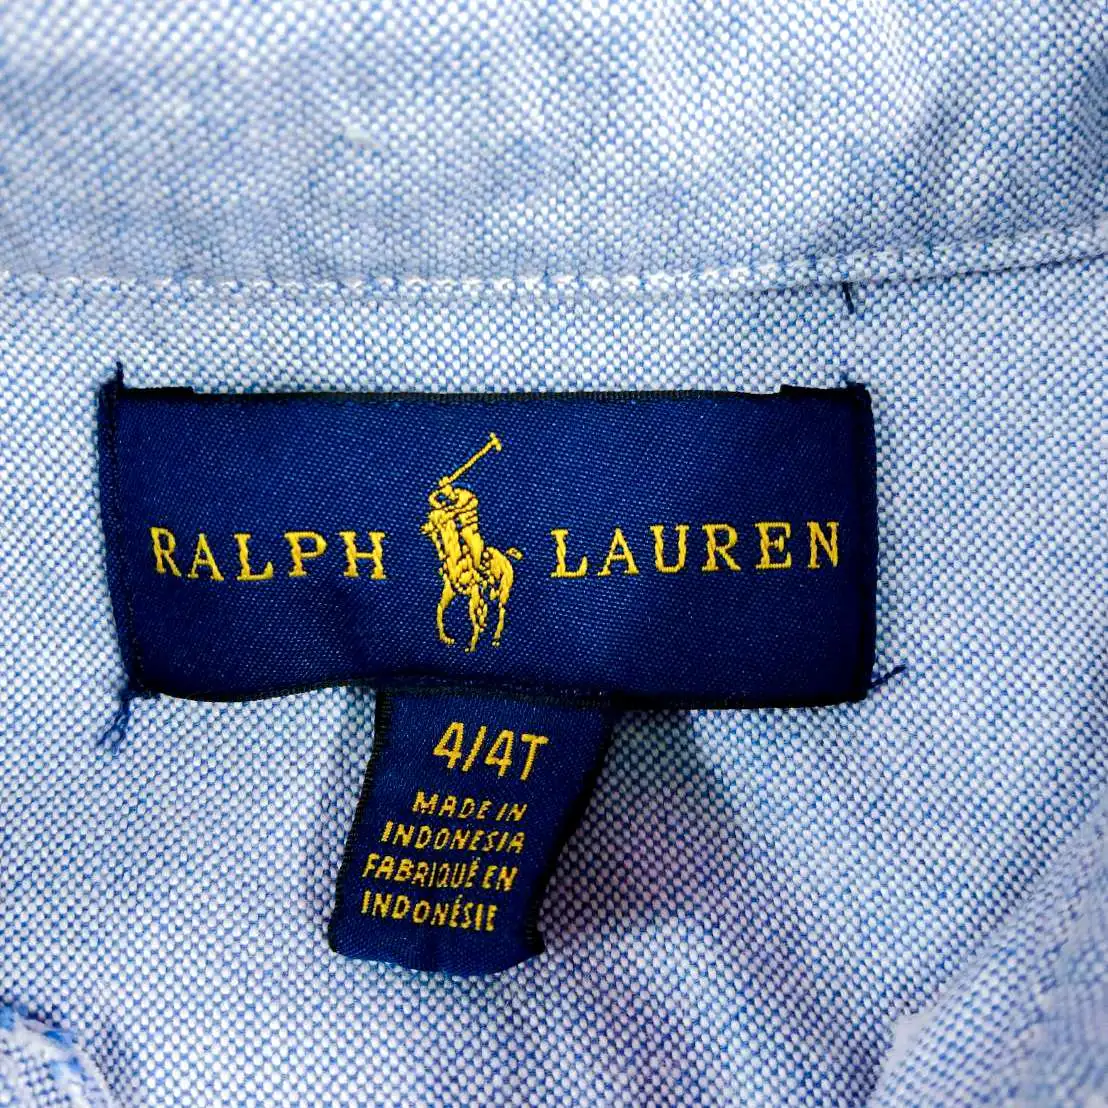 RALPH LAUREN เสื้อเชิ้ตแขนยาวไซส์ 4/4T 